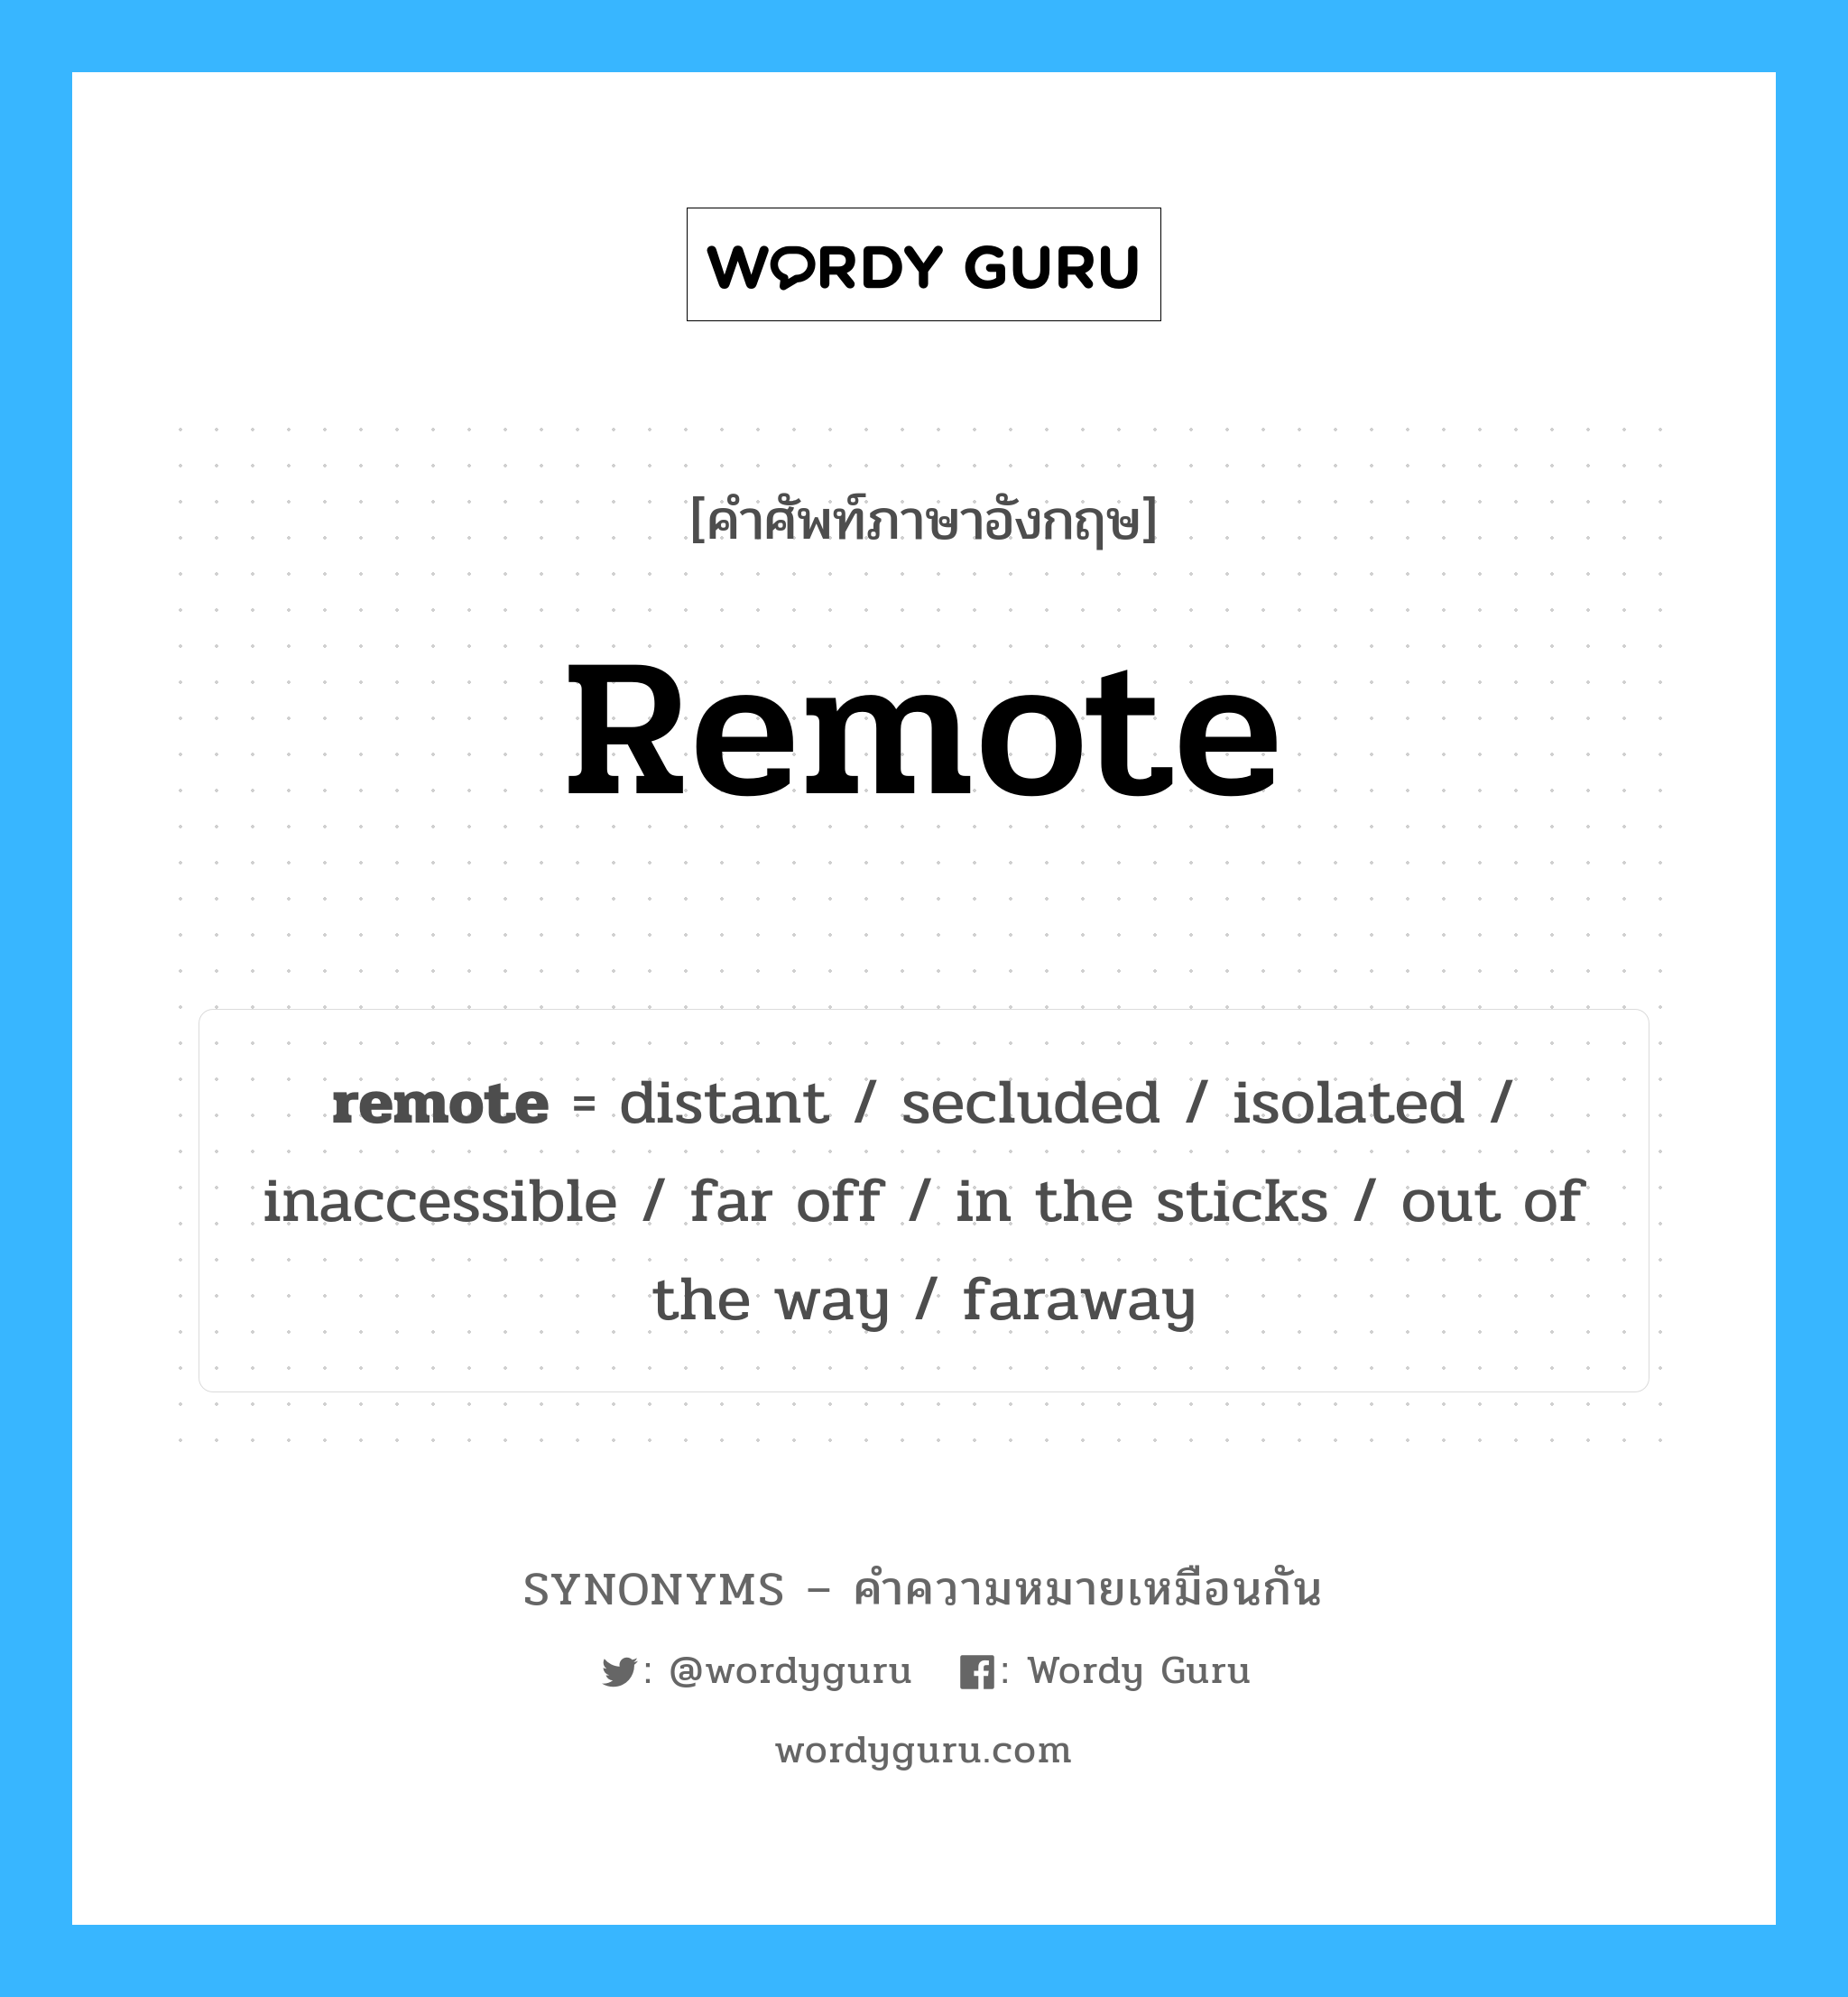 remote เป็นหนึ่งใน faraway และมีคำอื่น ๆ อีกดังนี้, คำศัพท์ภาษาอังกฤษ remote ความหมายคล้ายกันกับ faraway แปลว่า ห่างไกล หมวด faraway